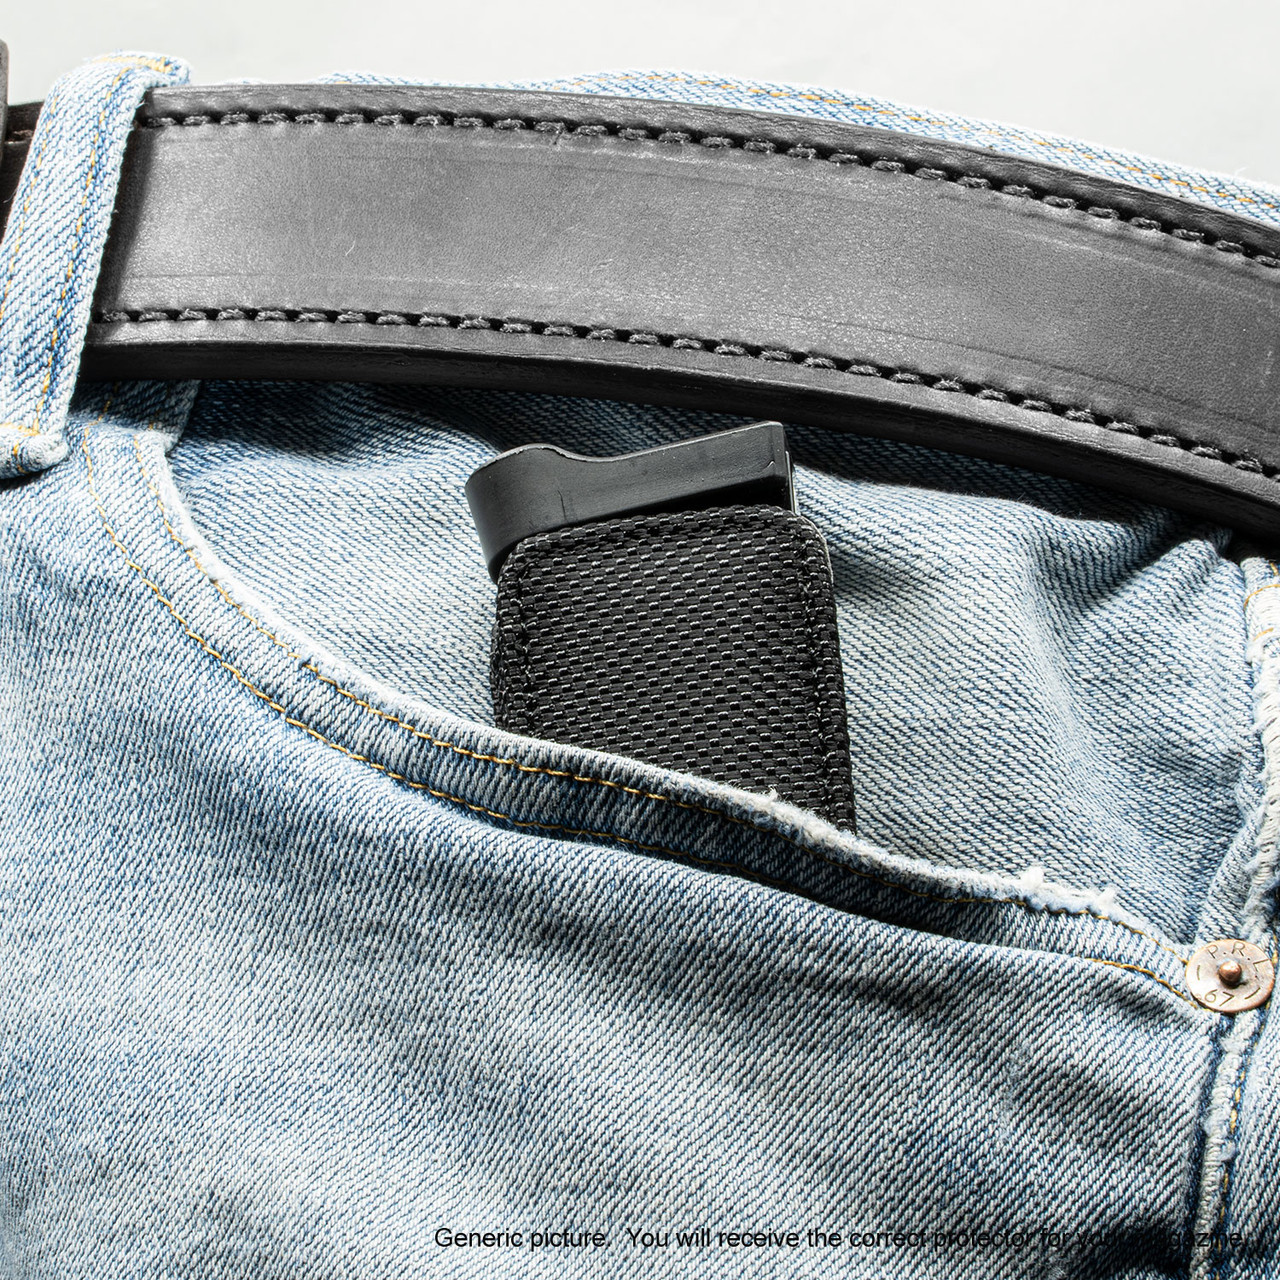 M&P Shield 9mm Black Ballistic Nylon Magazine Pocket Protector